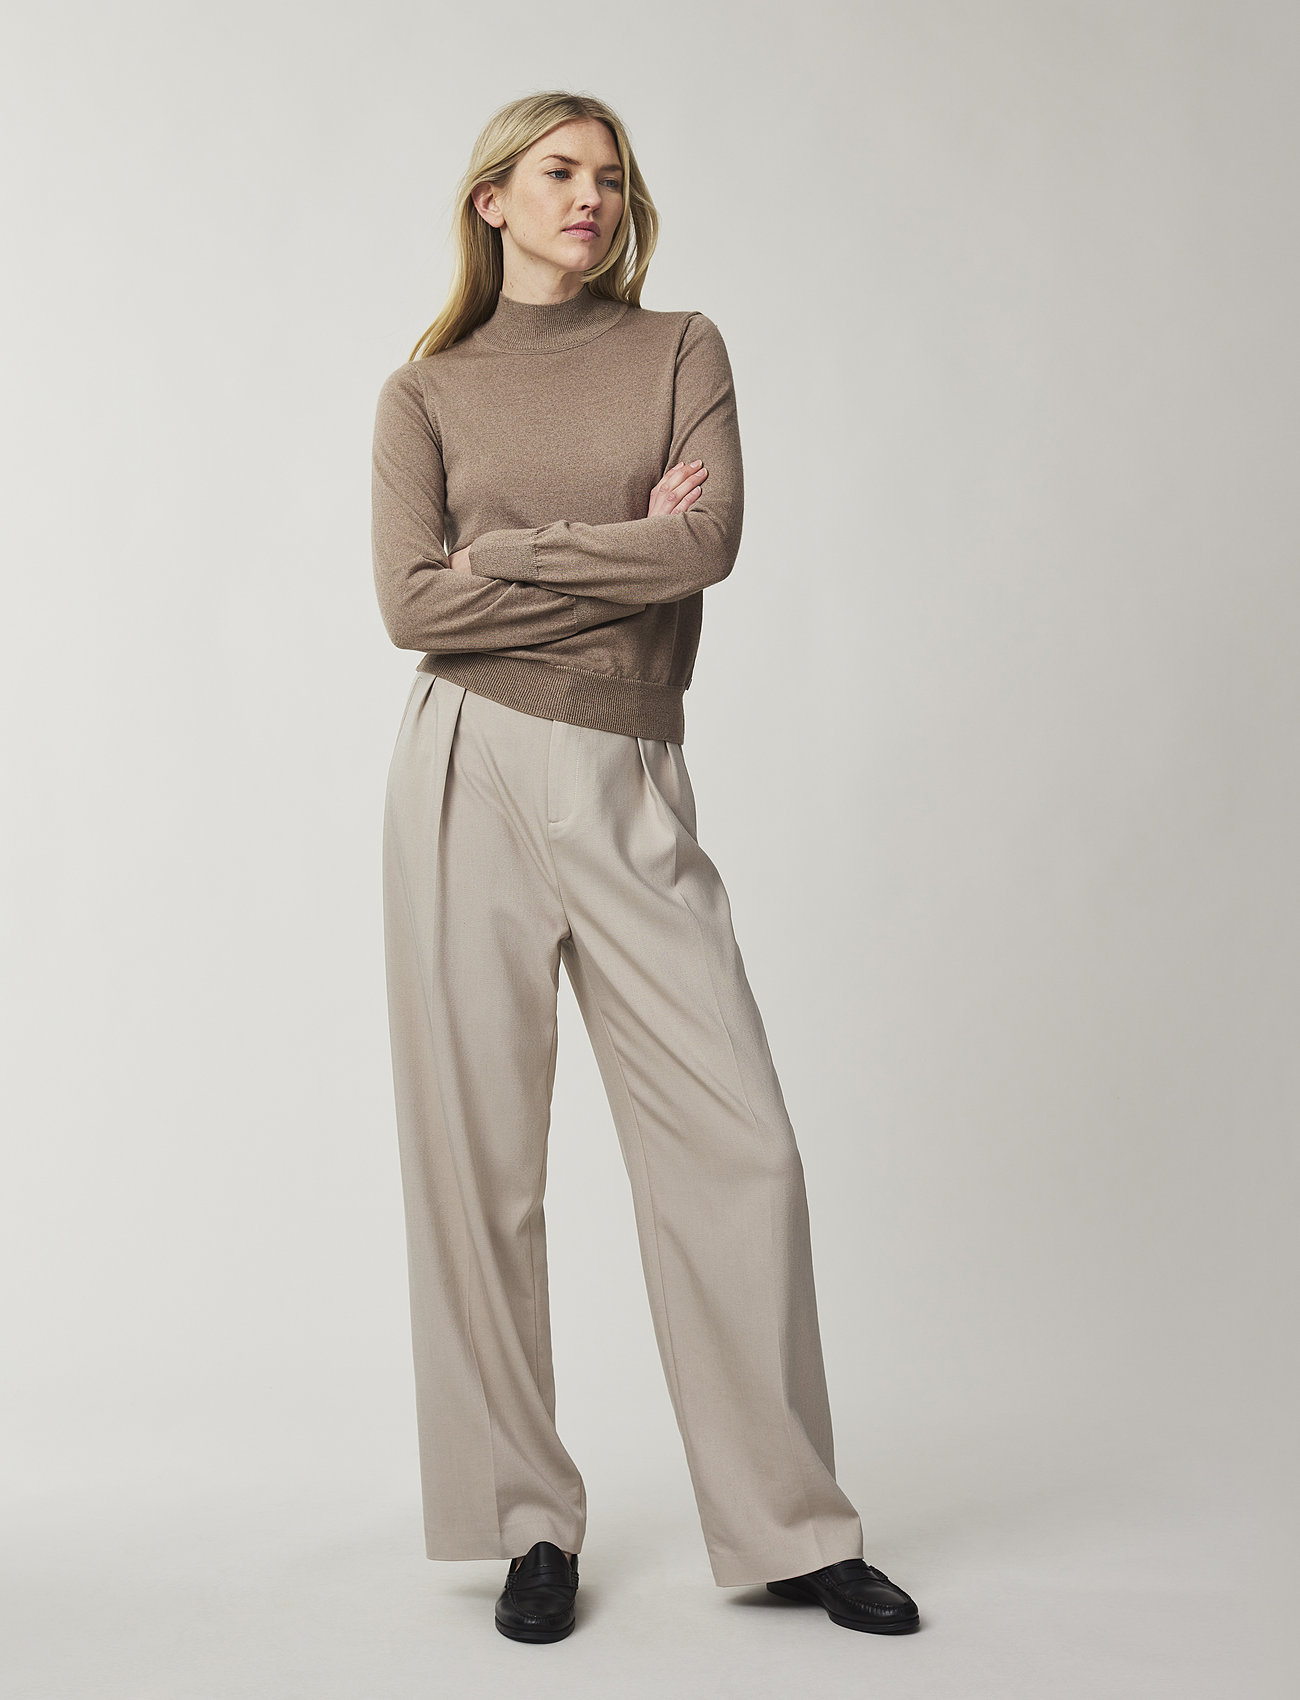 Lexington Clothing - Ellen Merino Wool Mock Neck Sweater - tröjor - light brown melange - 1